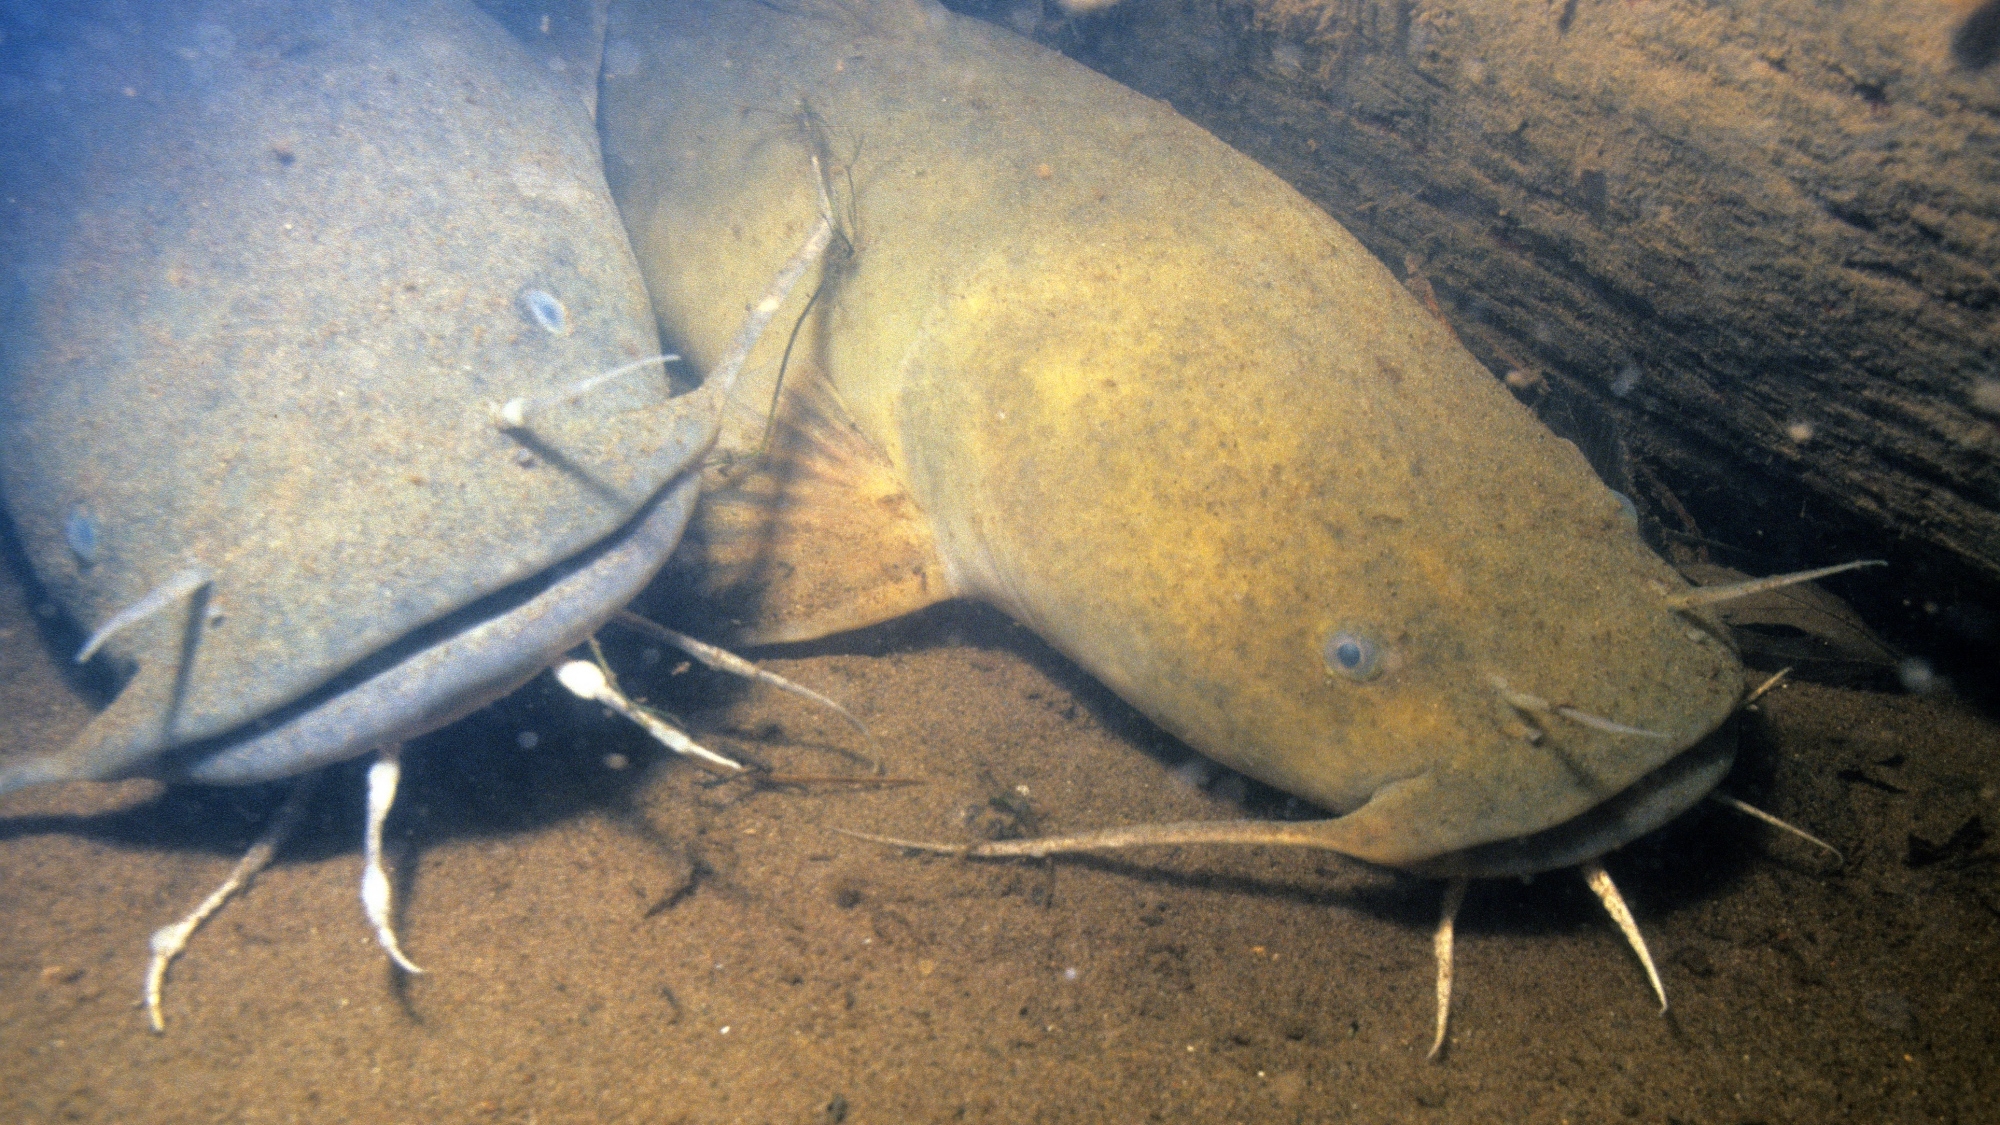 Texas Men Catch 98 Pound Flathead Catfish While Noodling